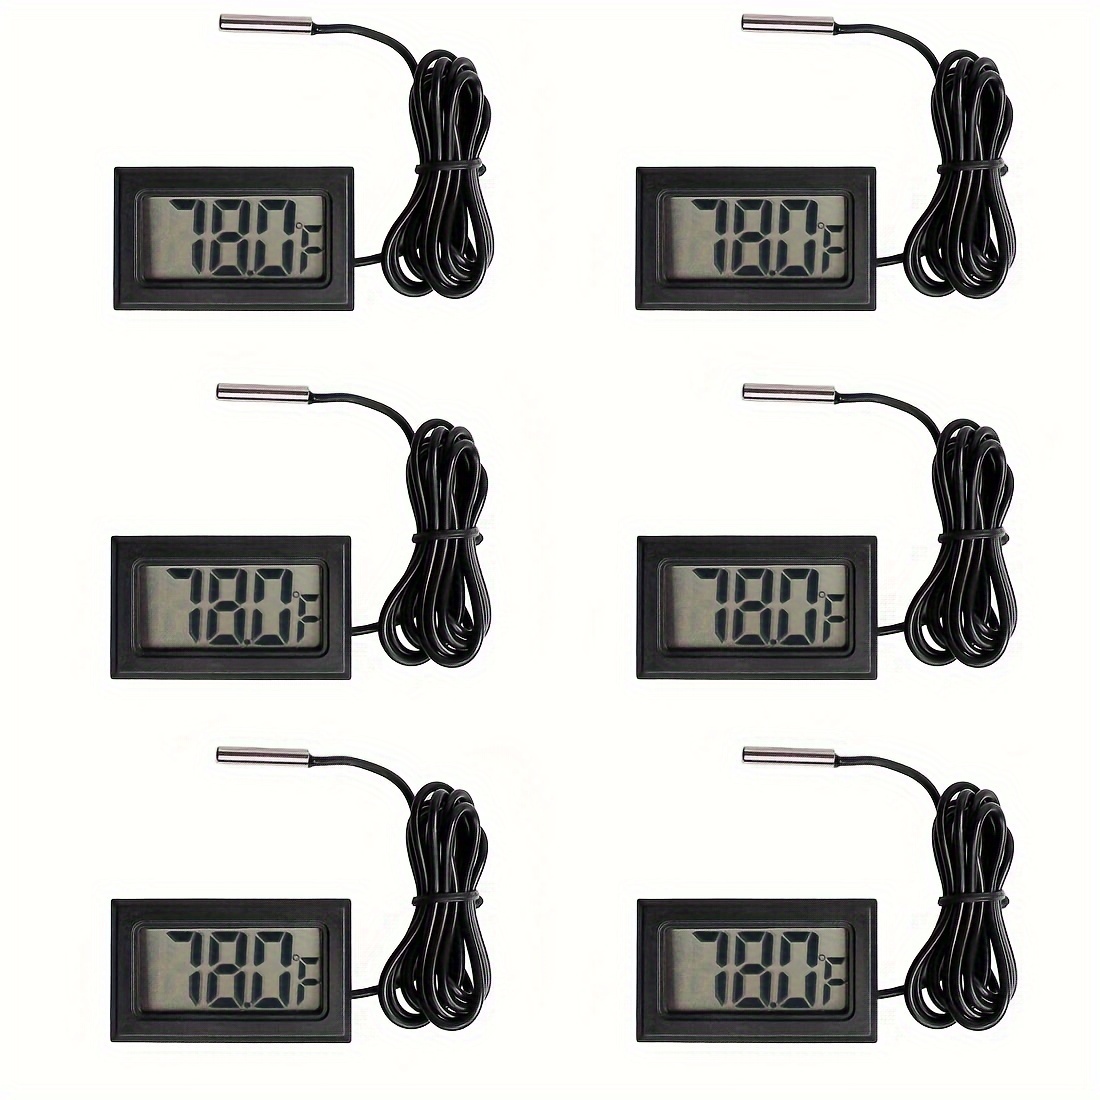 20pcs Electronic Digital Display Digital Thermometer Tpm-10 Fish Tank  Refrigerator Water Temperature Gauge Thermometer